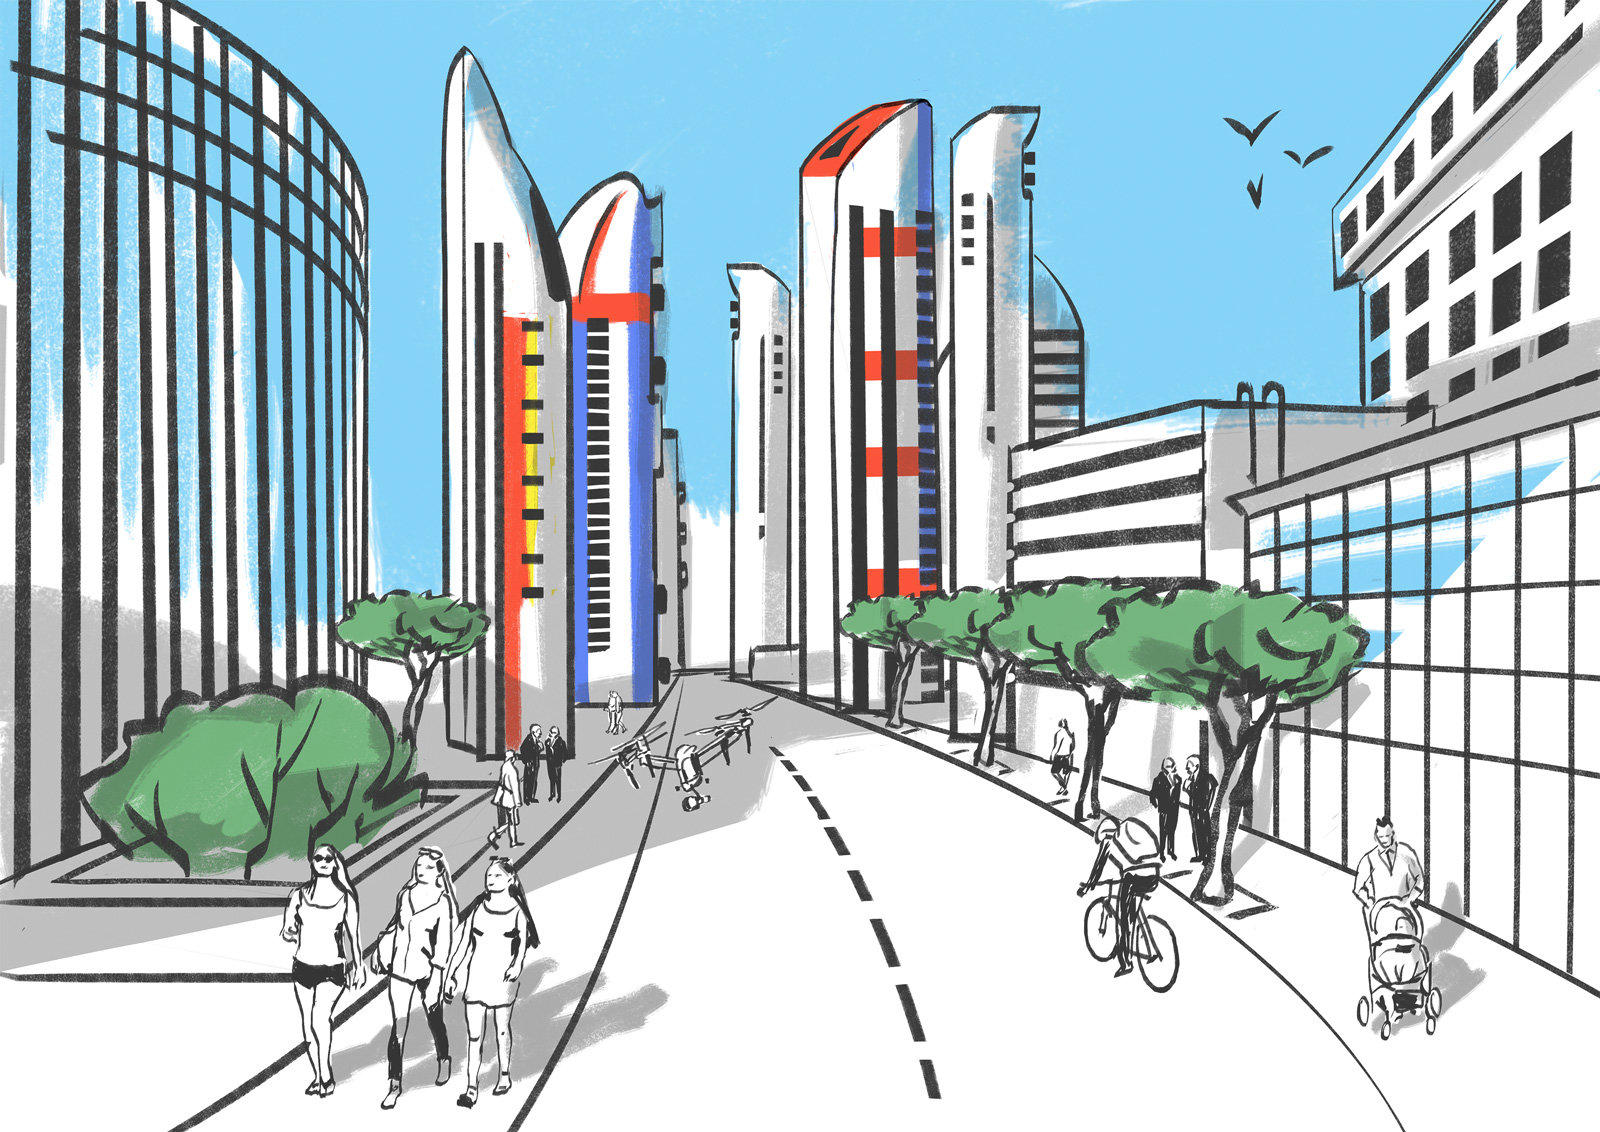 oculus-illustration-sbb-storyboard-visualisierung-architektur-train-city